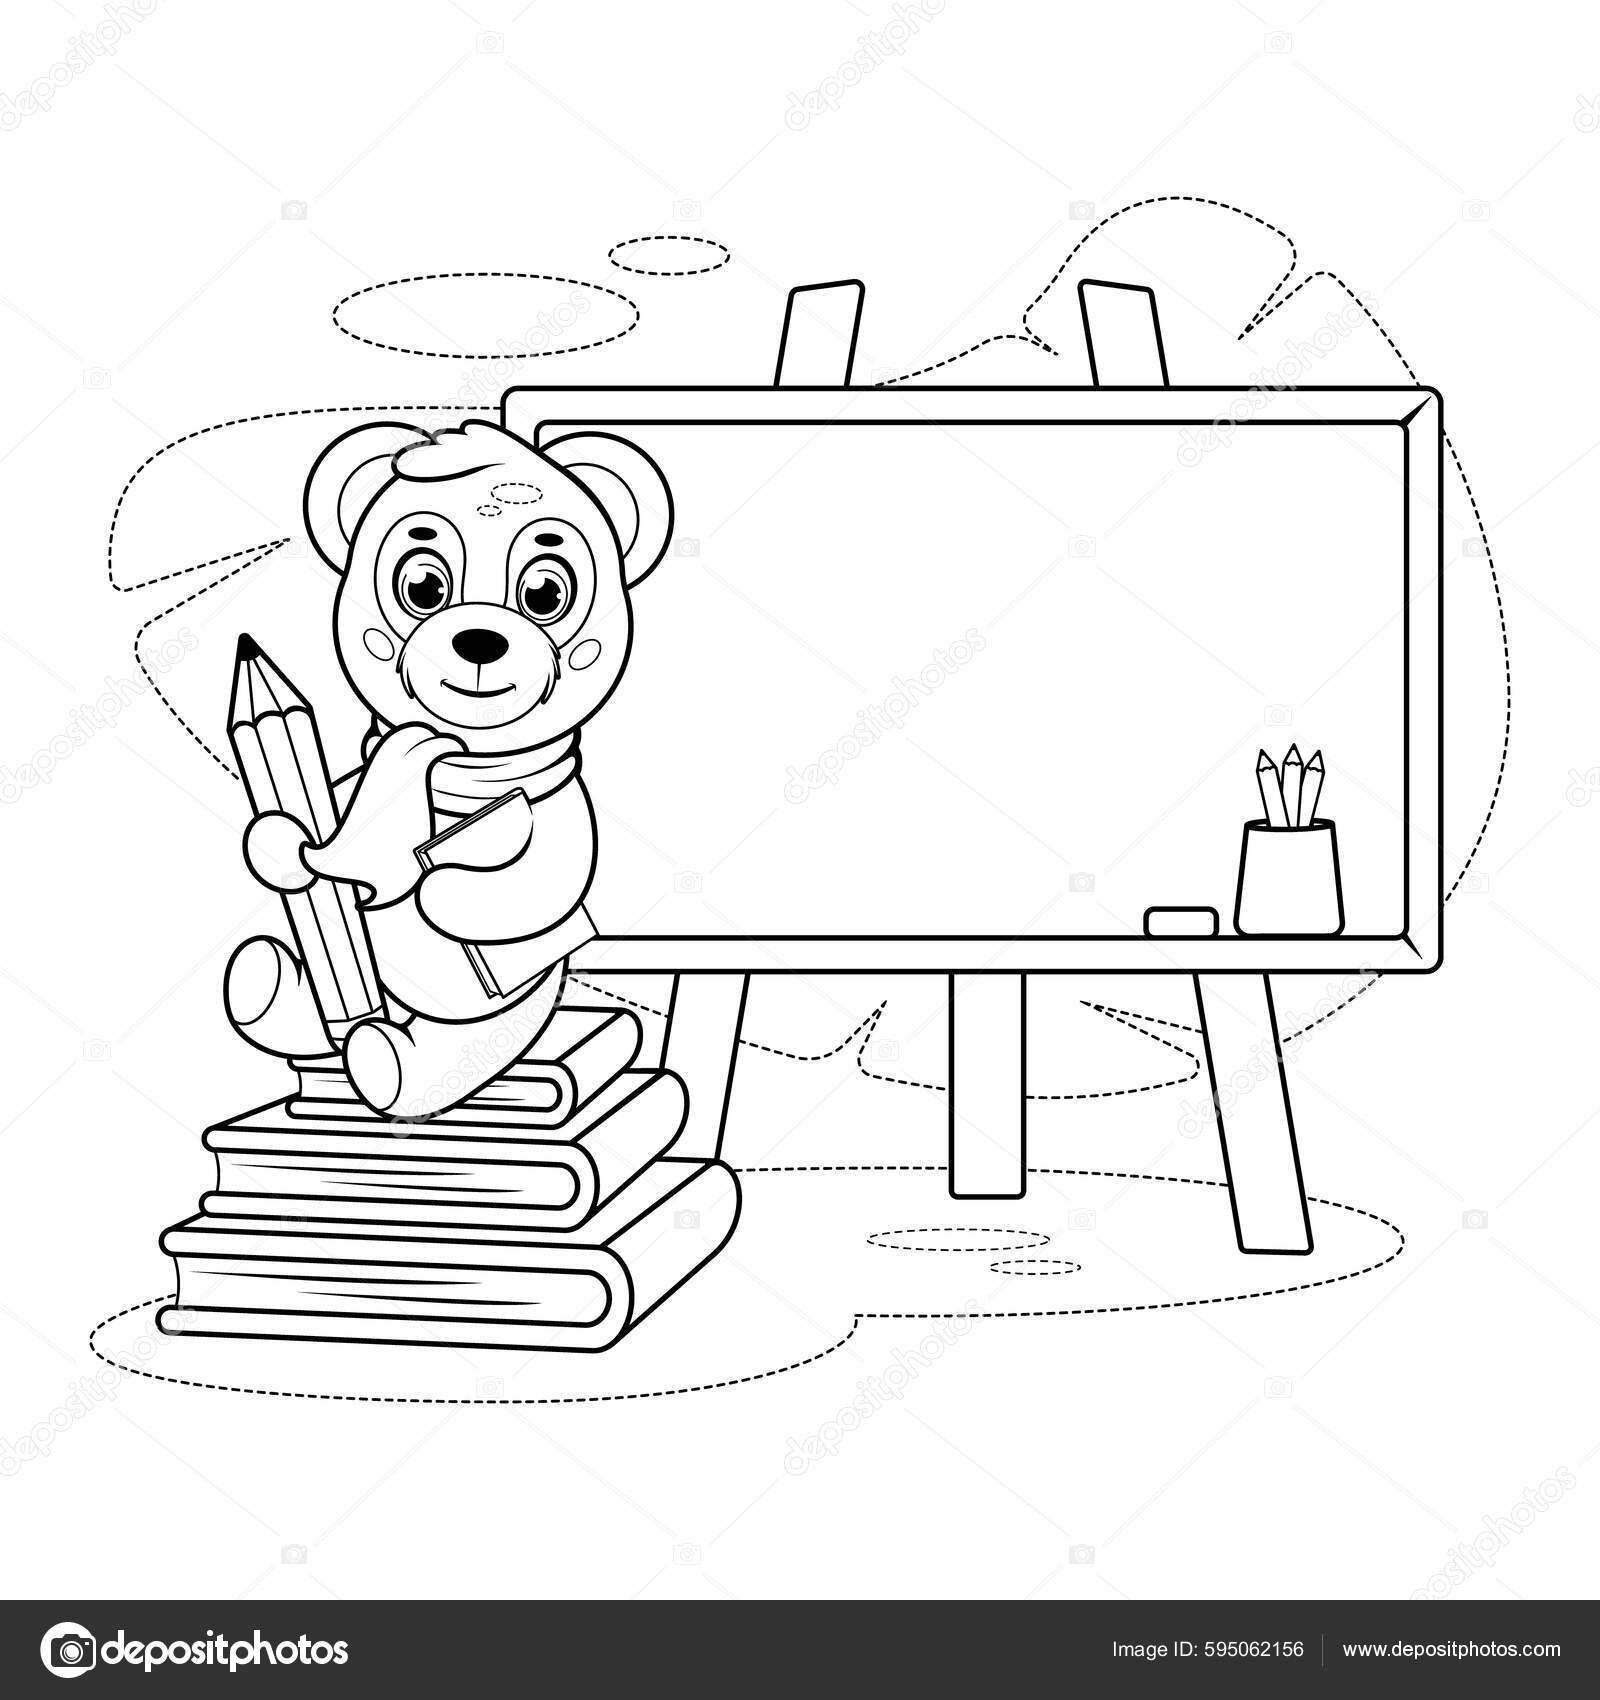 Coloring Page Smart Panda Pencil School Board Books Stock Vector by  ©vk.office.od.ua.gmail.com 595062156